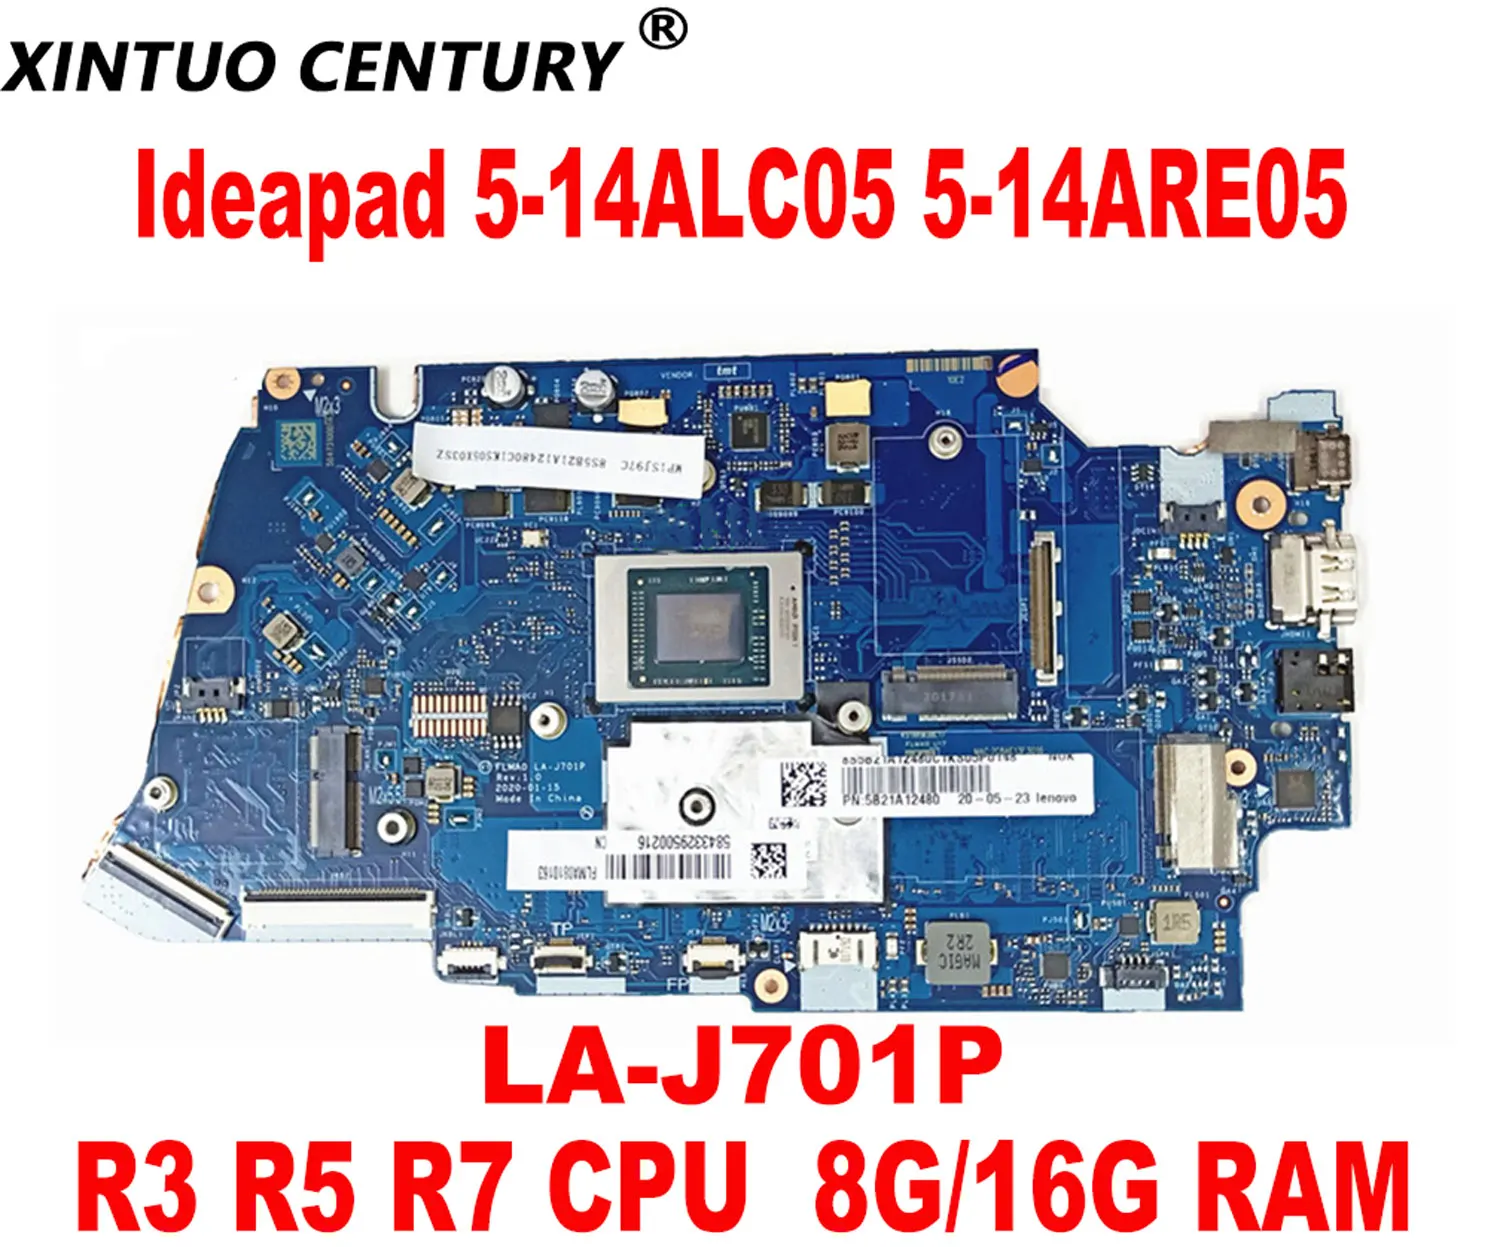 

LA-J701P материнская плата для Lenovo Ideapad 5-14ALC05 5-14ARE05 материнская плата для ноутбука с процессором R3 R5 R7 8 ГБ/16 ГБ ОЗУ 100% DDR4